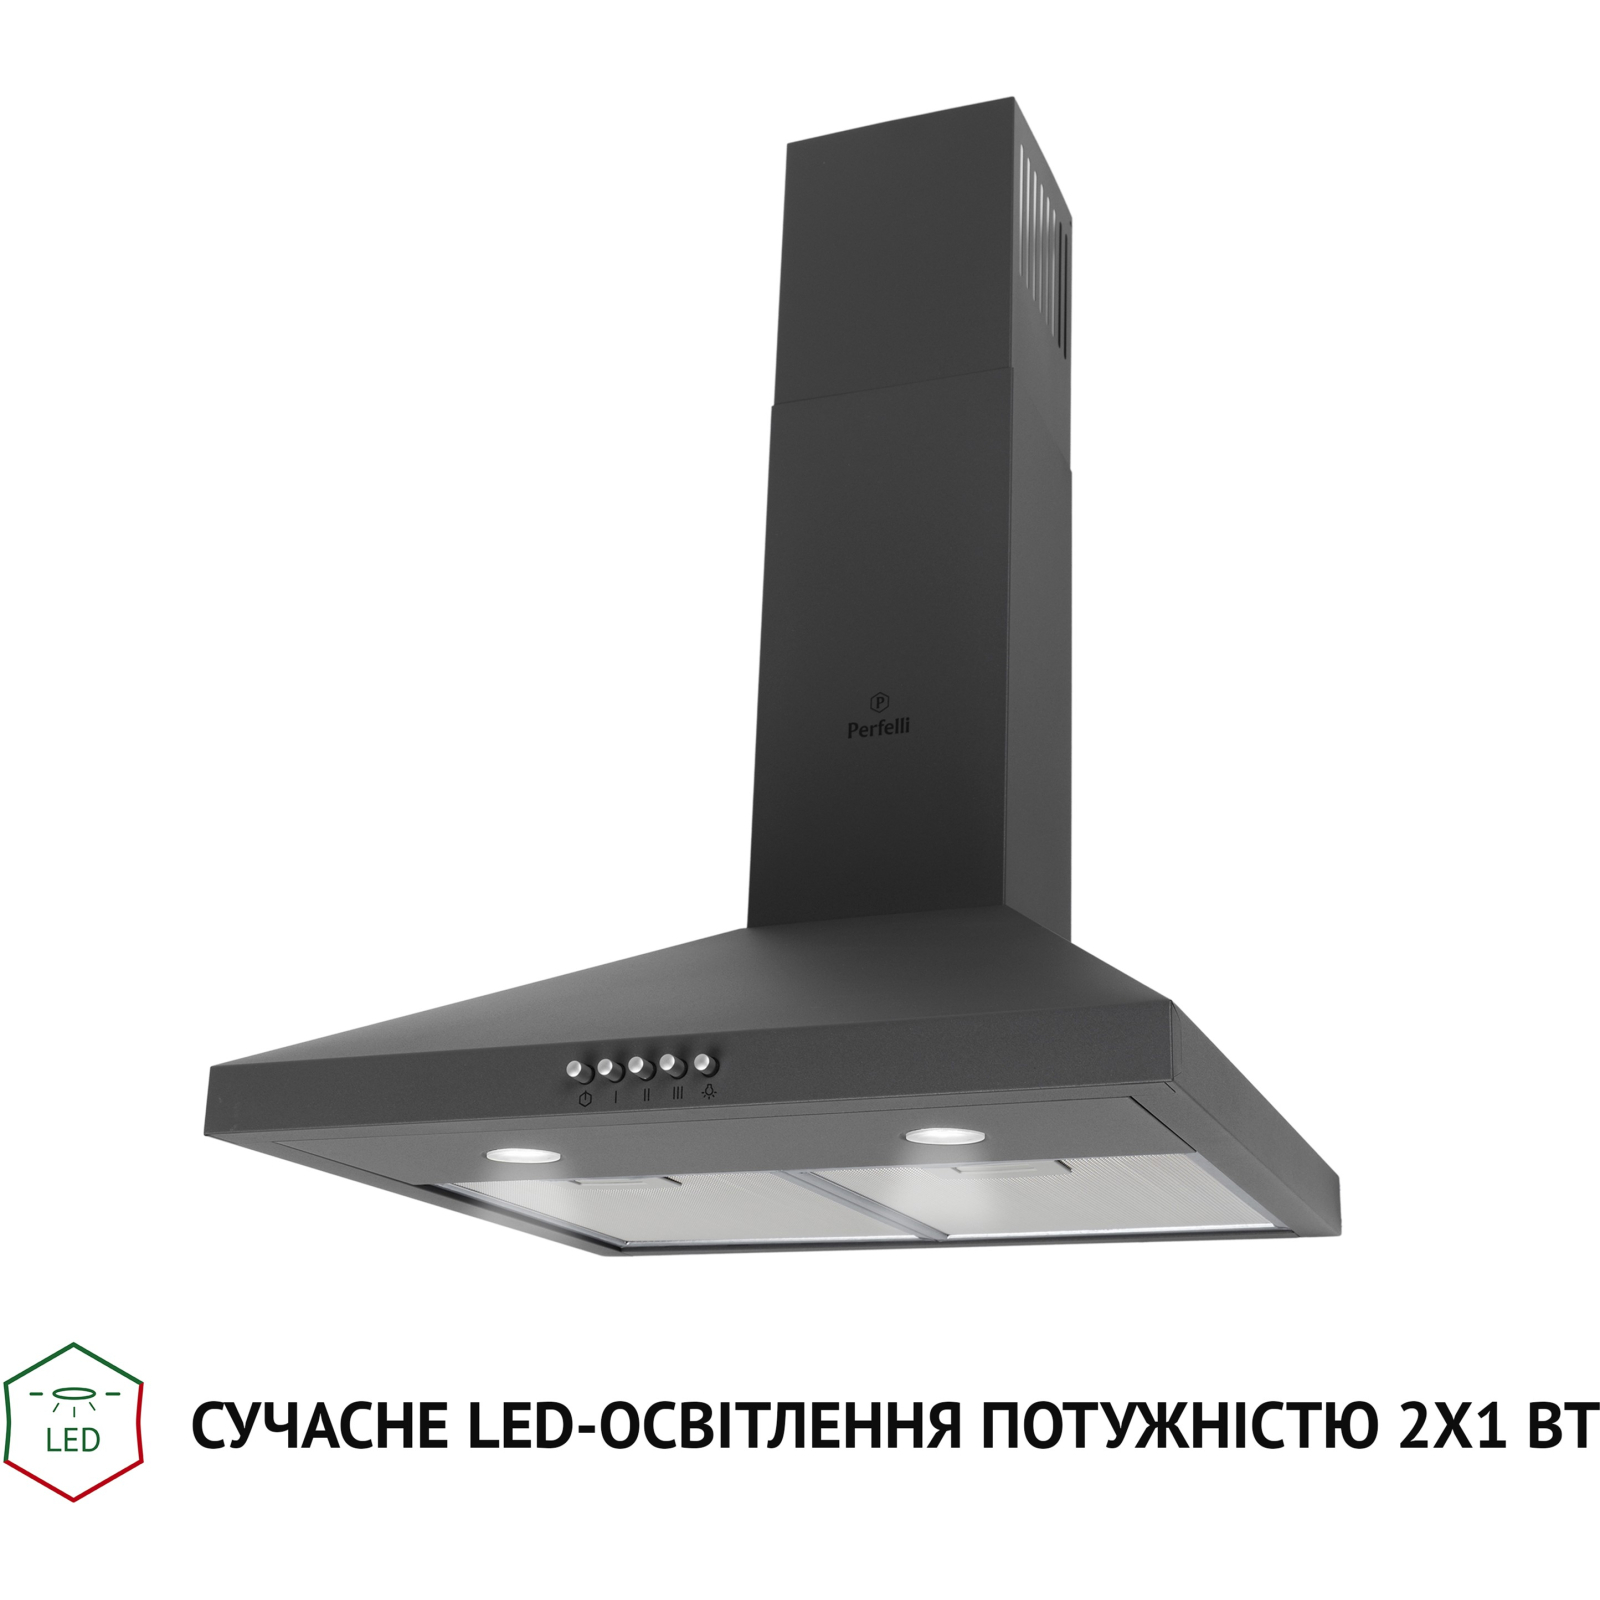 Вытяжка кухонная Perfelli K 5202 I 700 LED изображение 3